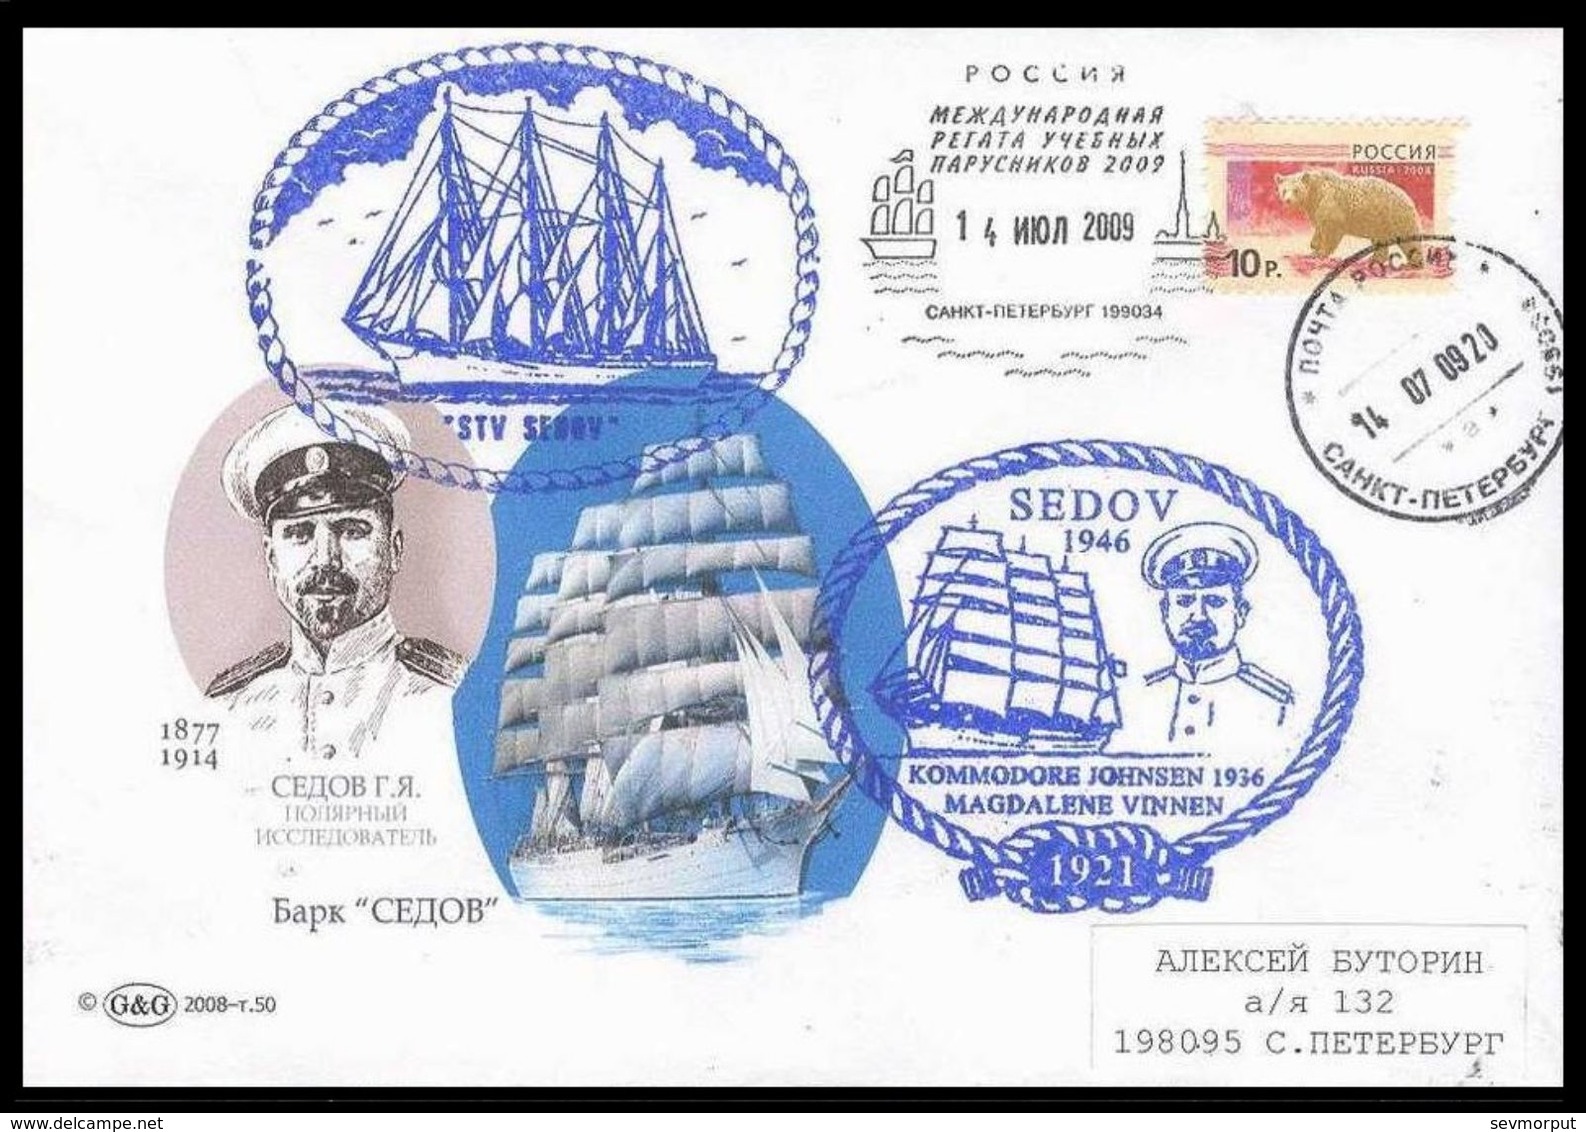 RUSSIA 2009 COVER Used REGATA REGATE REGATTA SEDOV TRAINING SAILING SHIP BATEAU RACE MAGDALENE VINNEN II JOHNSEN Mailed - Barche